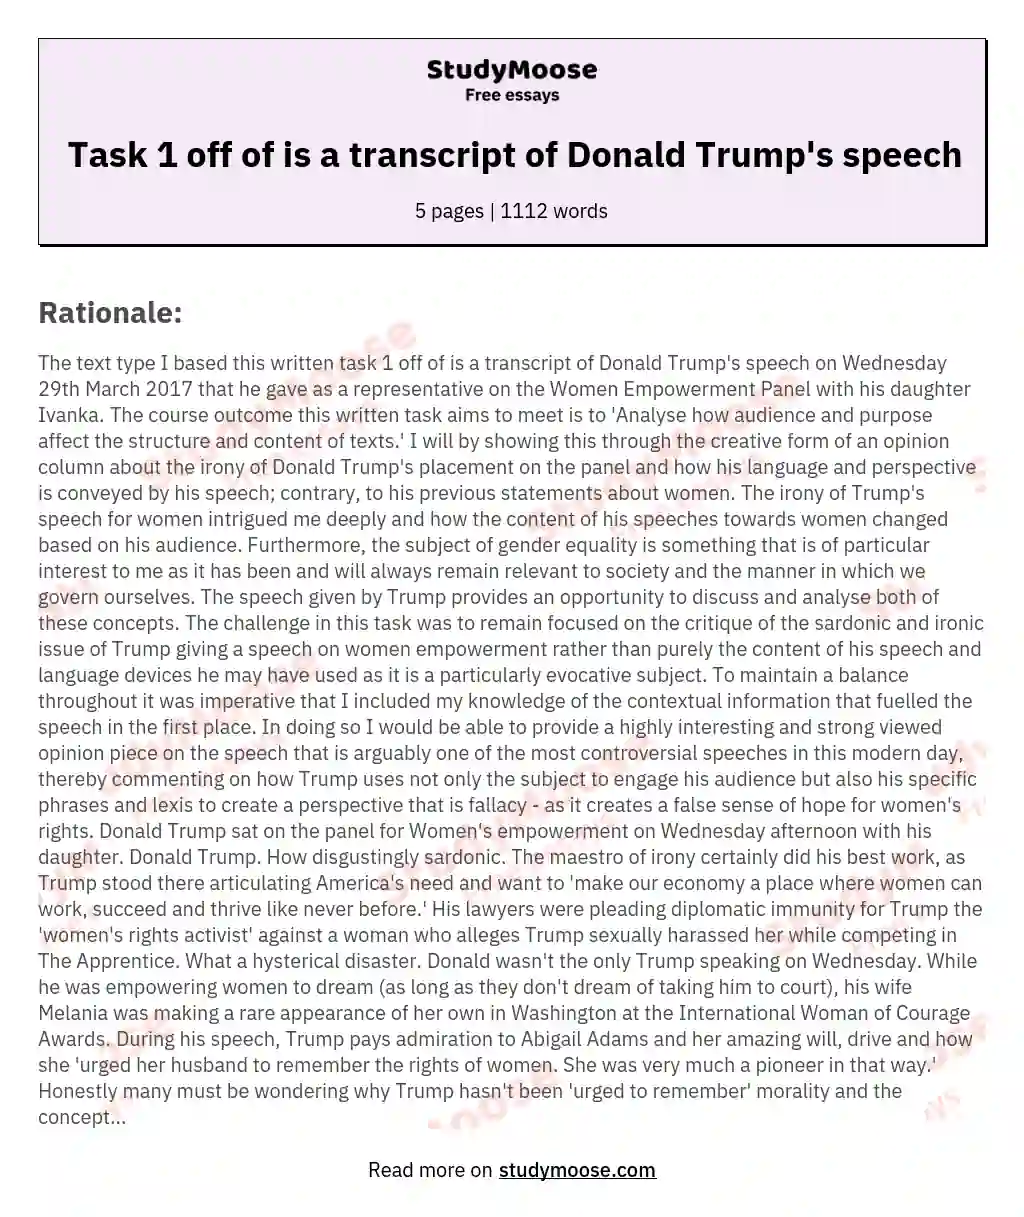 Task 1 off of is a transcript of Donald Trump's speech essay